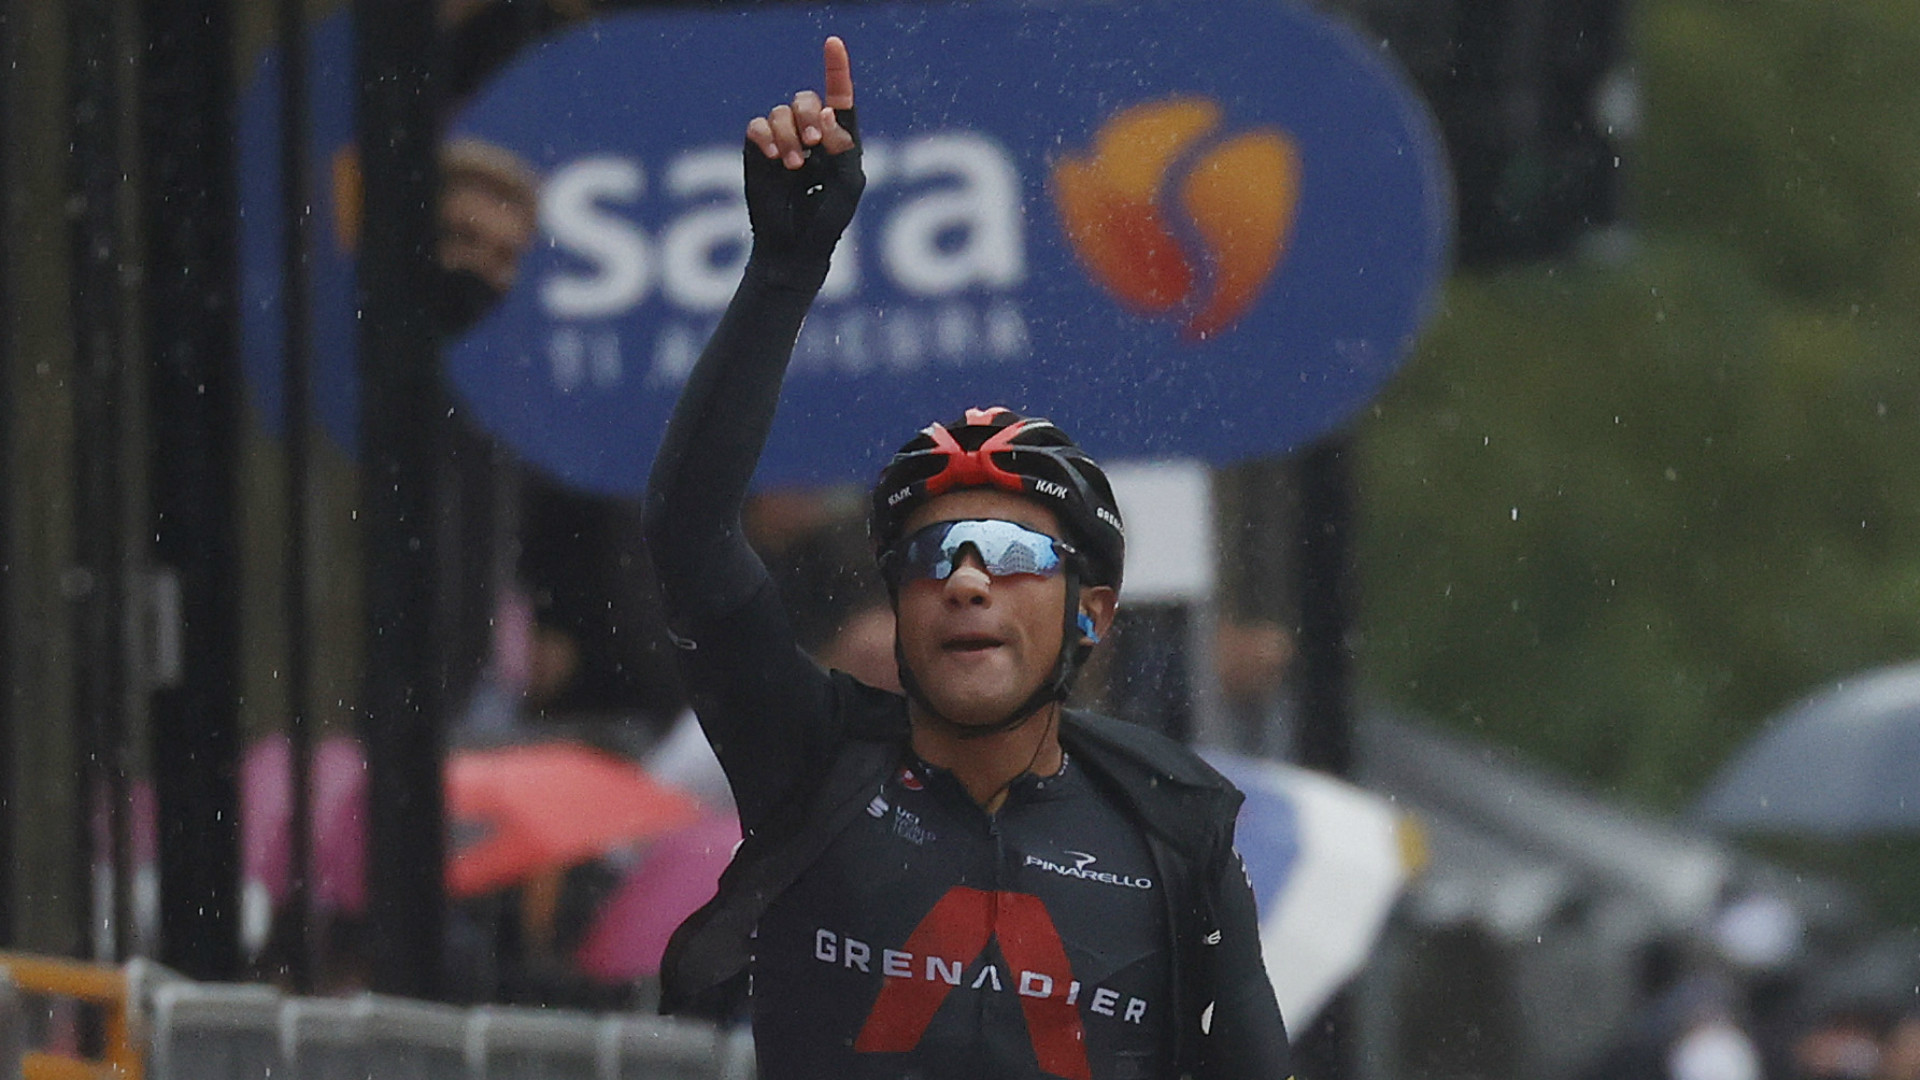 Giro d'Italia: Narvaez wins stage 12 in treacherous conditions